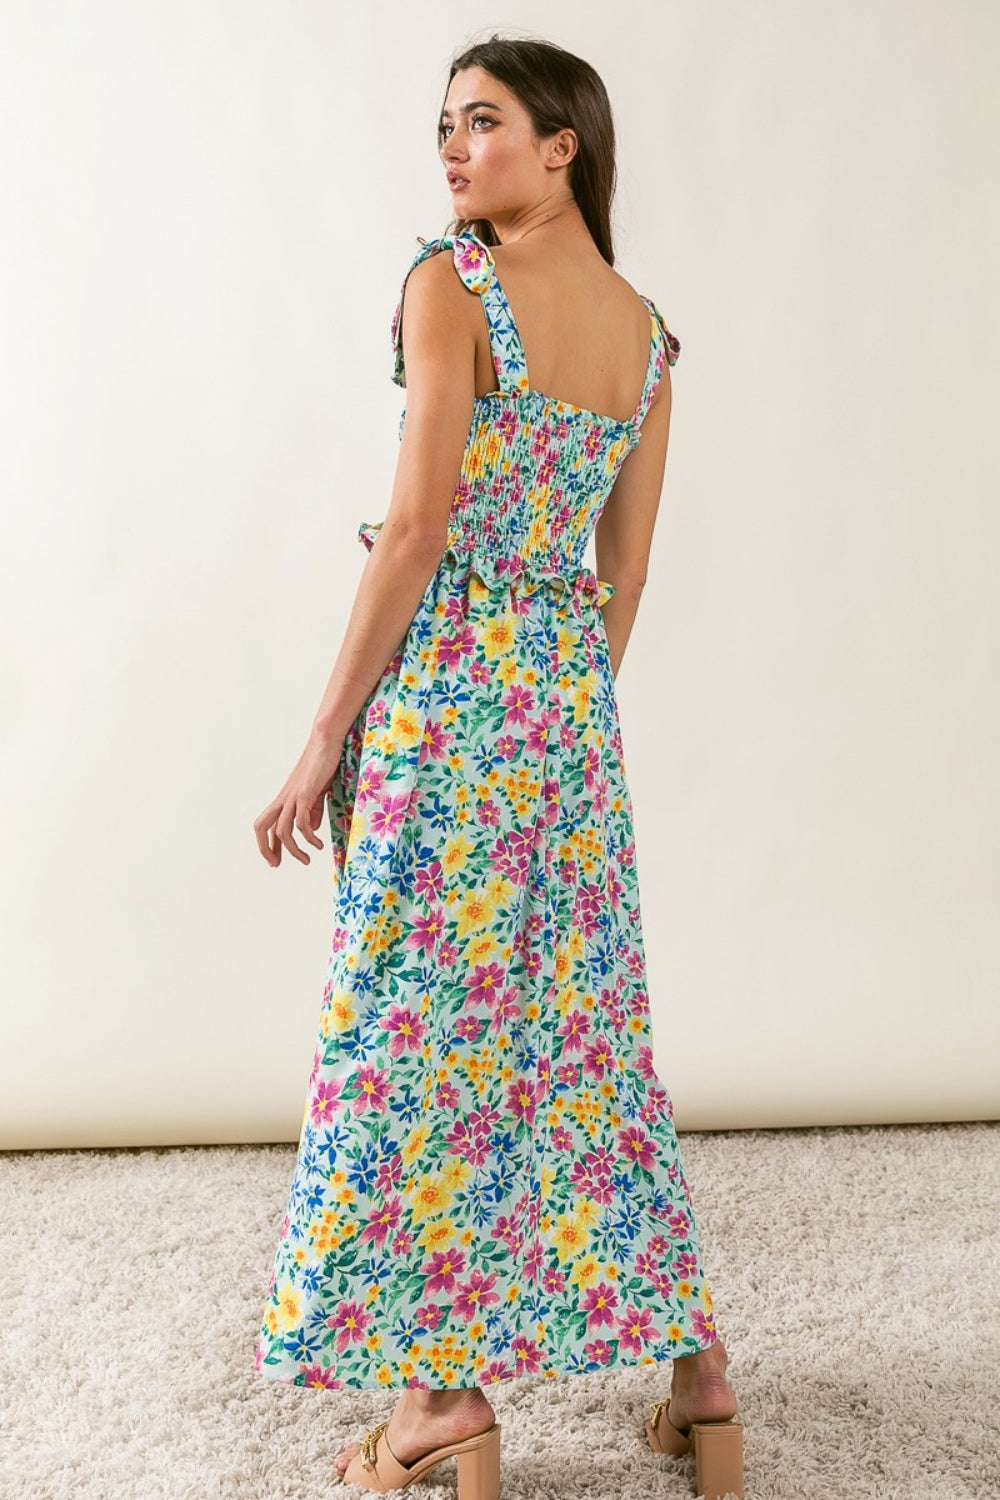 Beach Wedding Guest Attire: Elegant Women's Smocked Cami Dress with Floral Ruffles